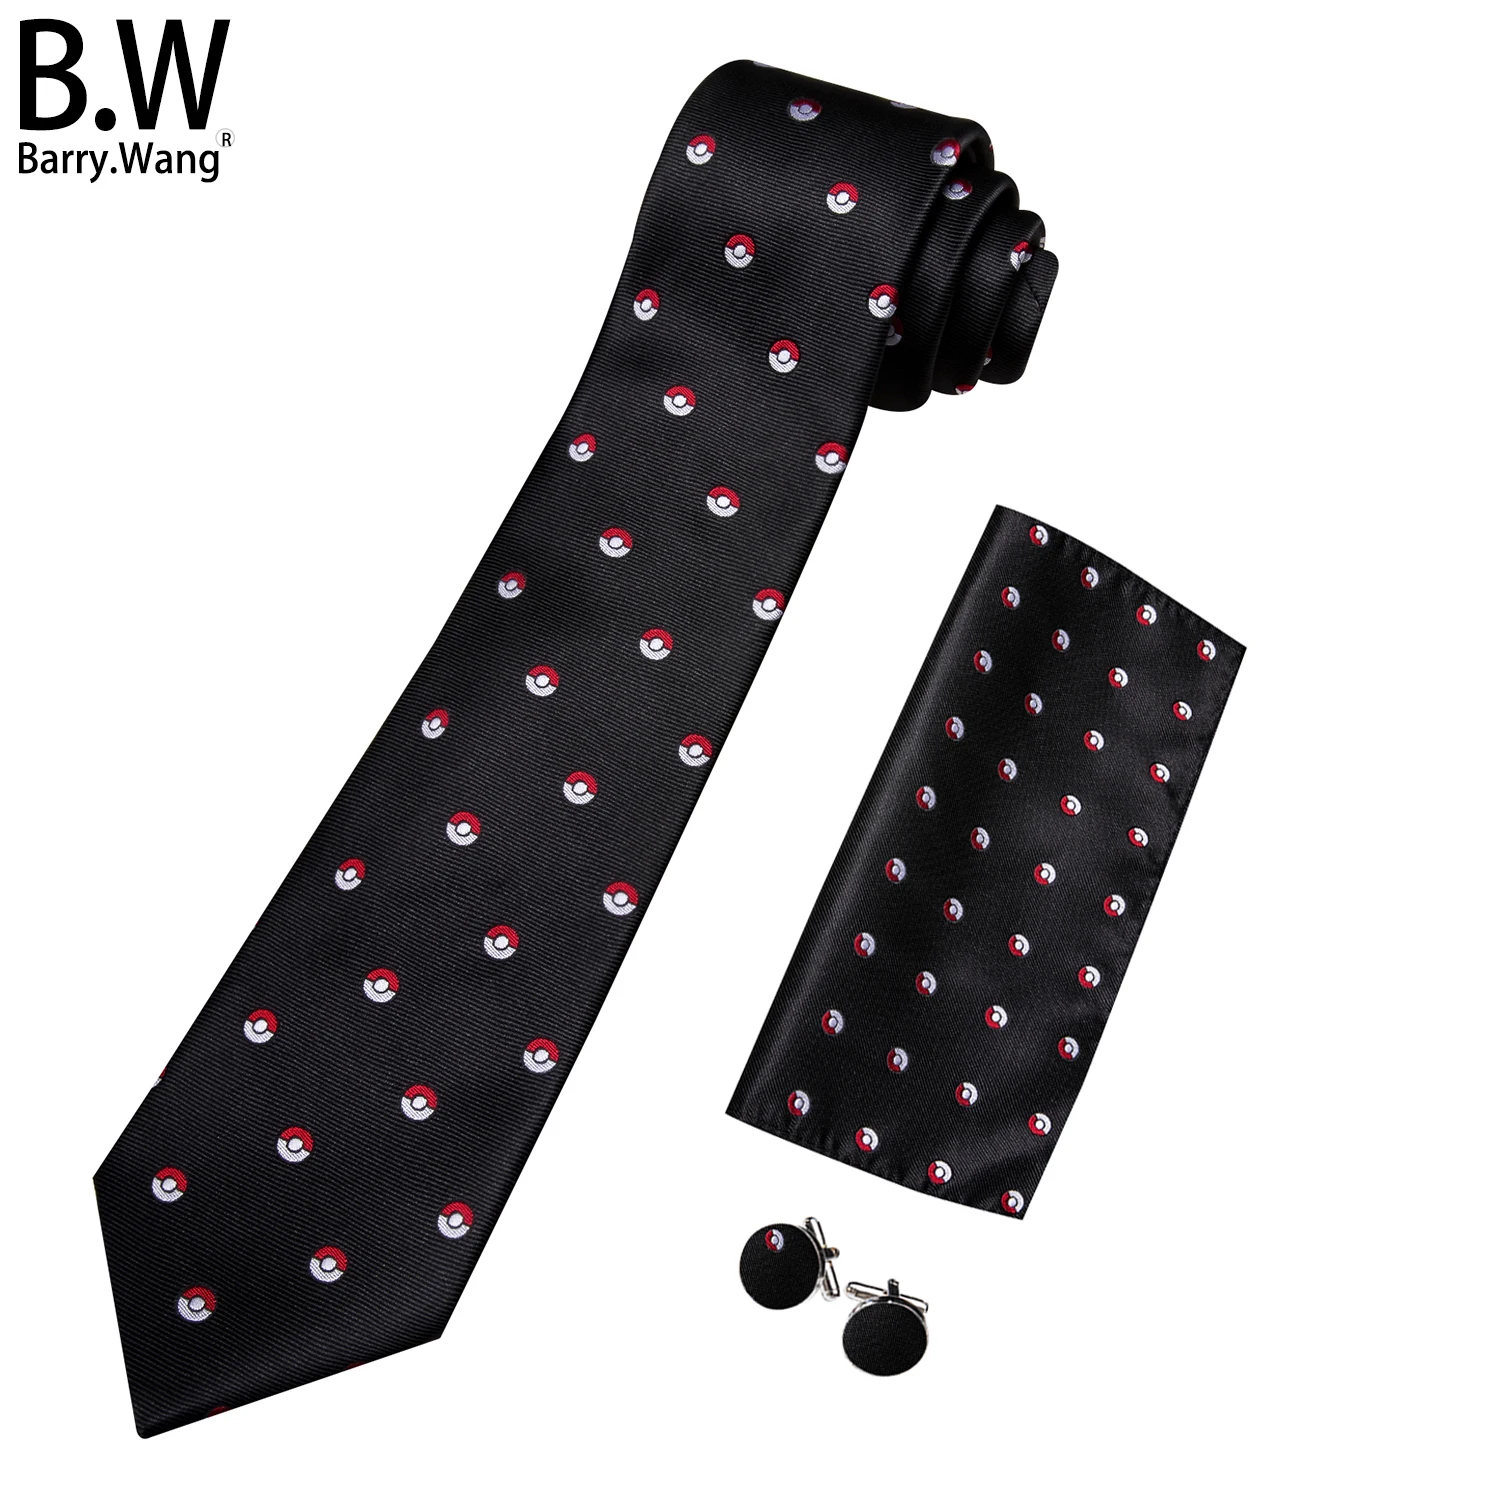 

Barry.Wang Novelty Silk Men Tie Handkerchief Cufflinks Set Designer Jacquard Necktie for Male Wedding Business Prom Stylish Gift